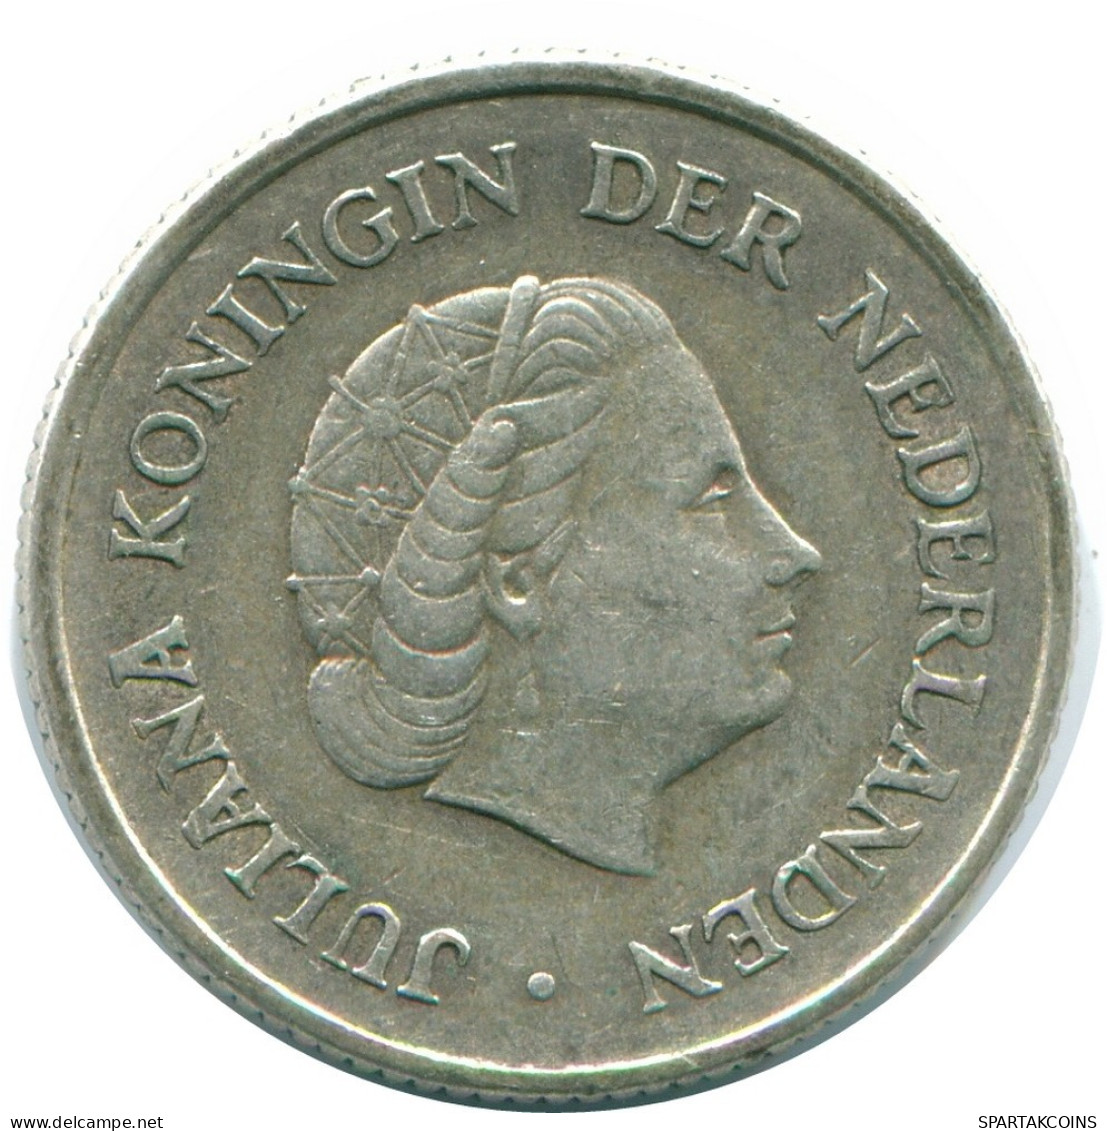 1/4 GULDEN 1967 NETHERLANDS ANTILLES SILVER Colonial Coin #NL11504.4.U.A - Niederländische Antillen